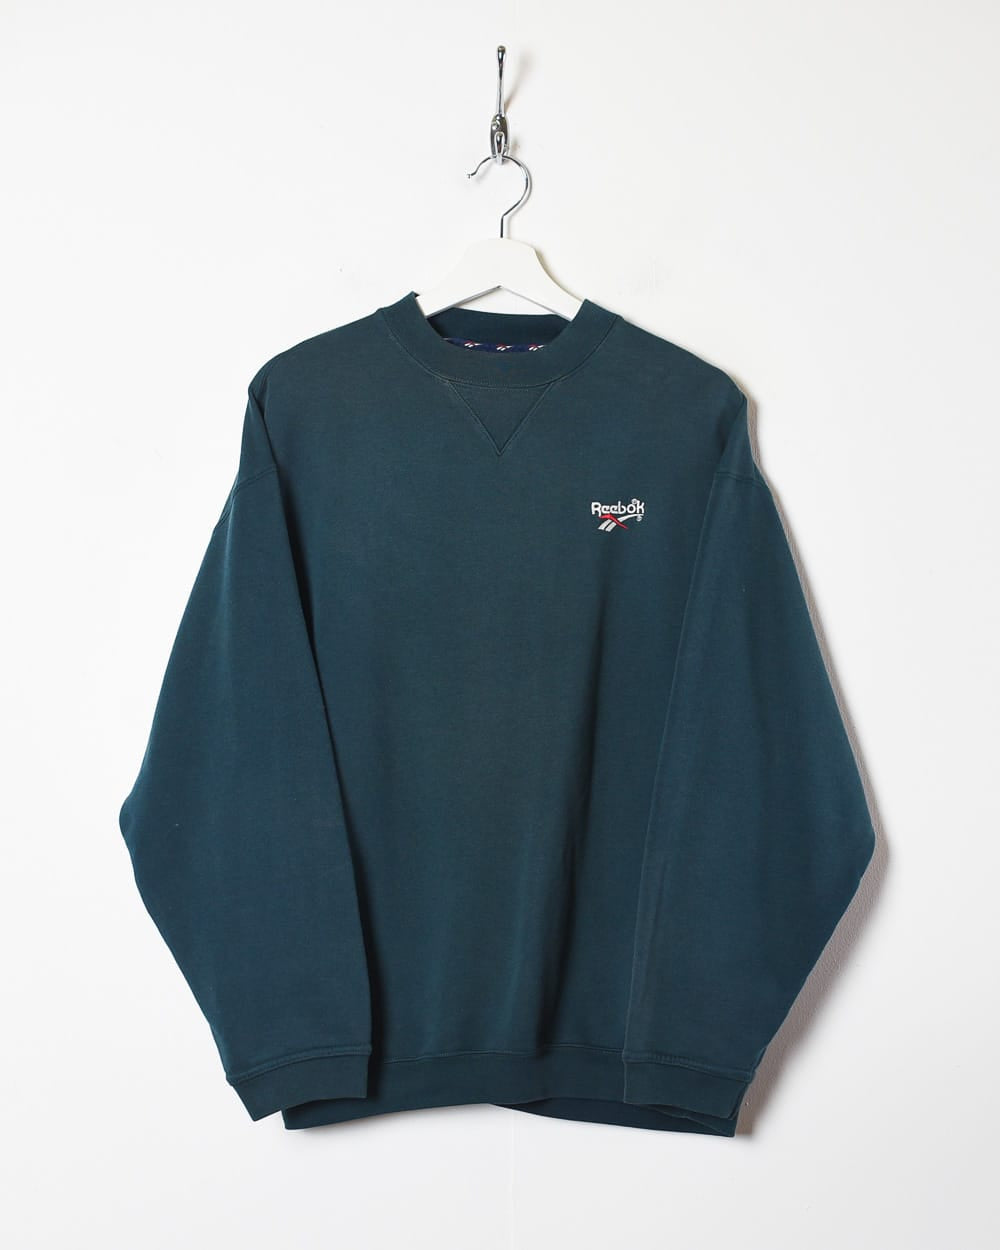 Green Reebok Sweatshirt - Small